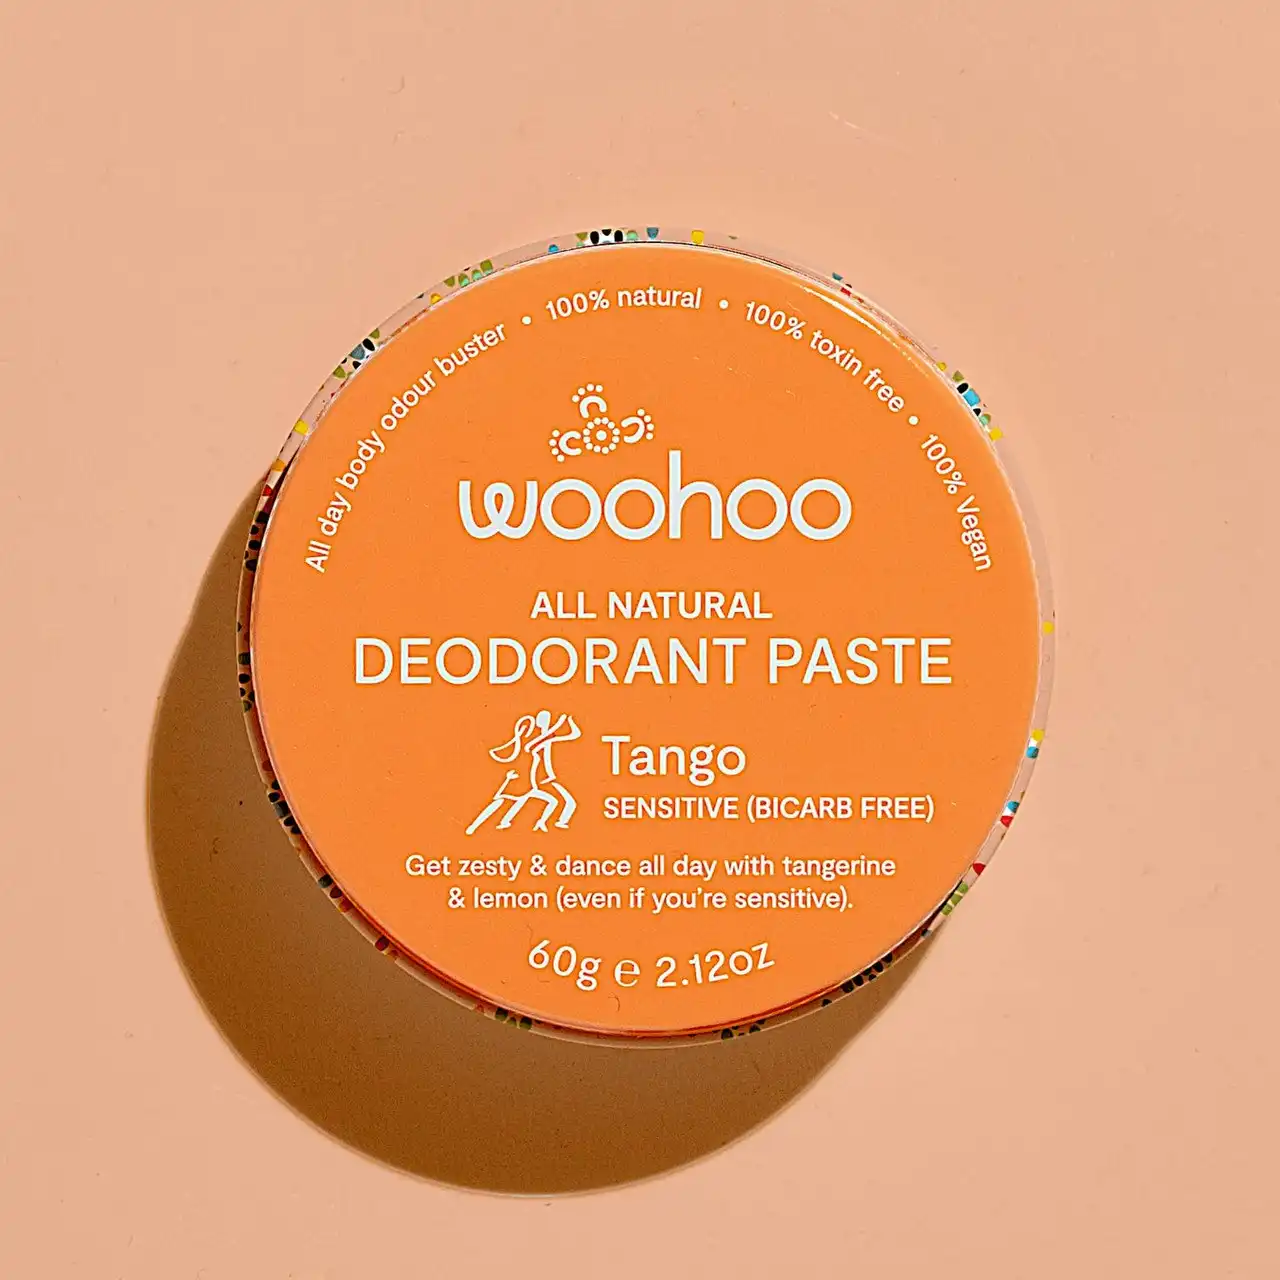 Woohoo All Natural Deodorant Paste Tango 60g